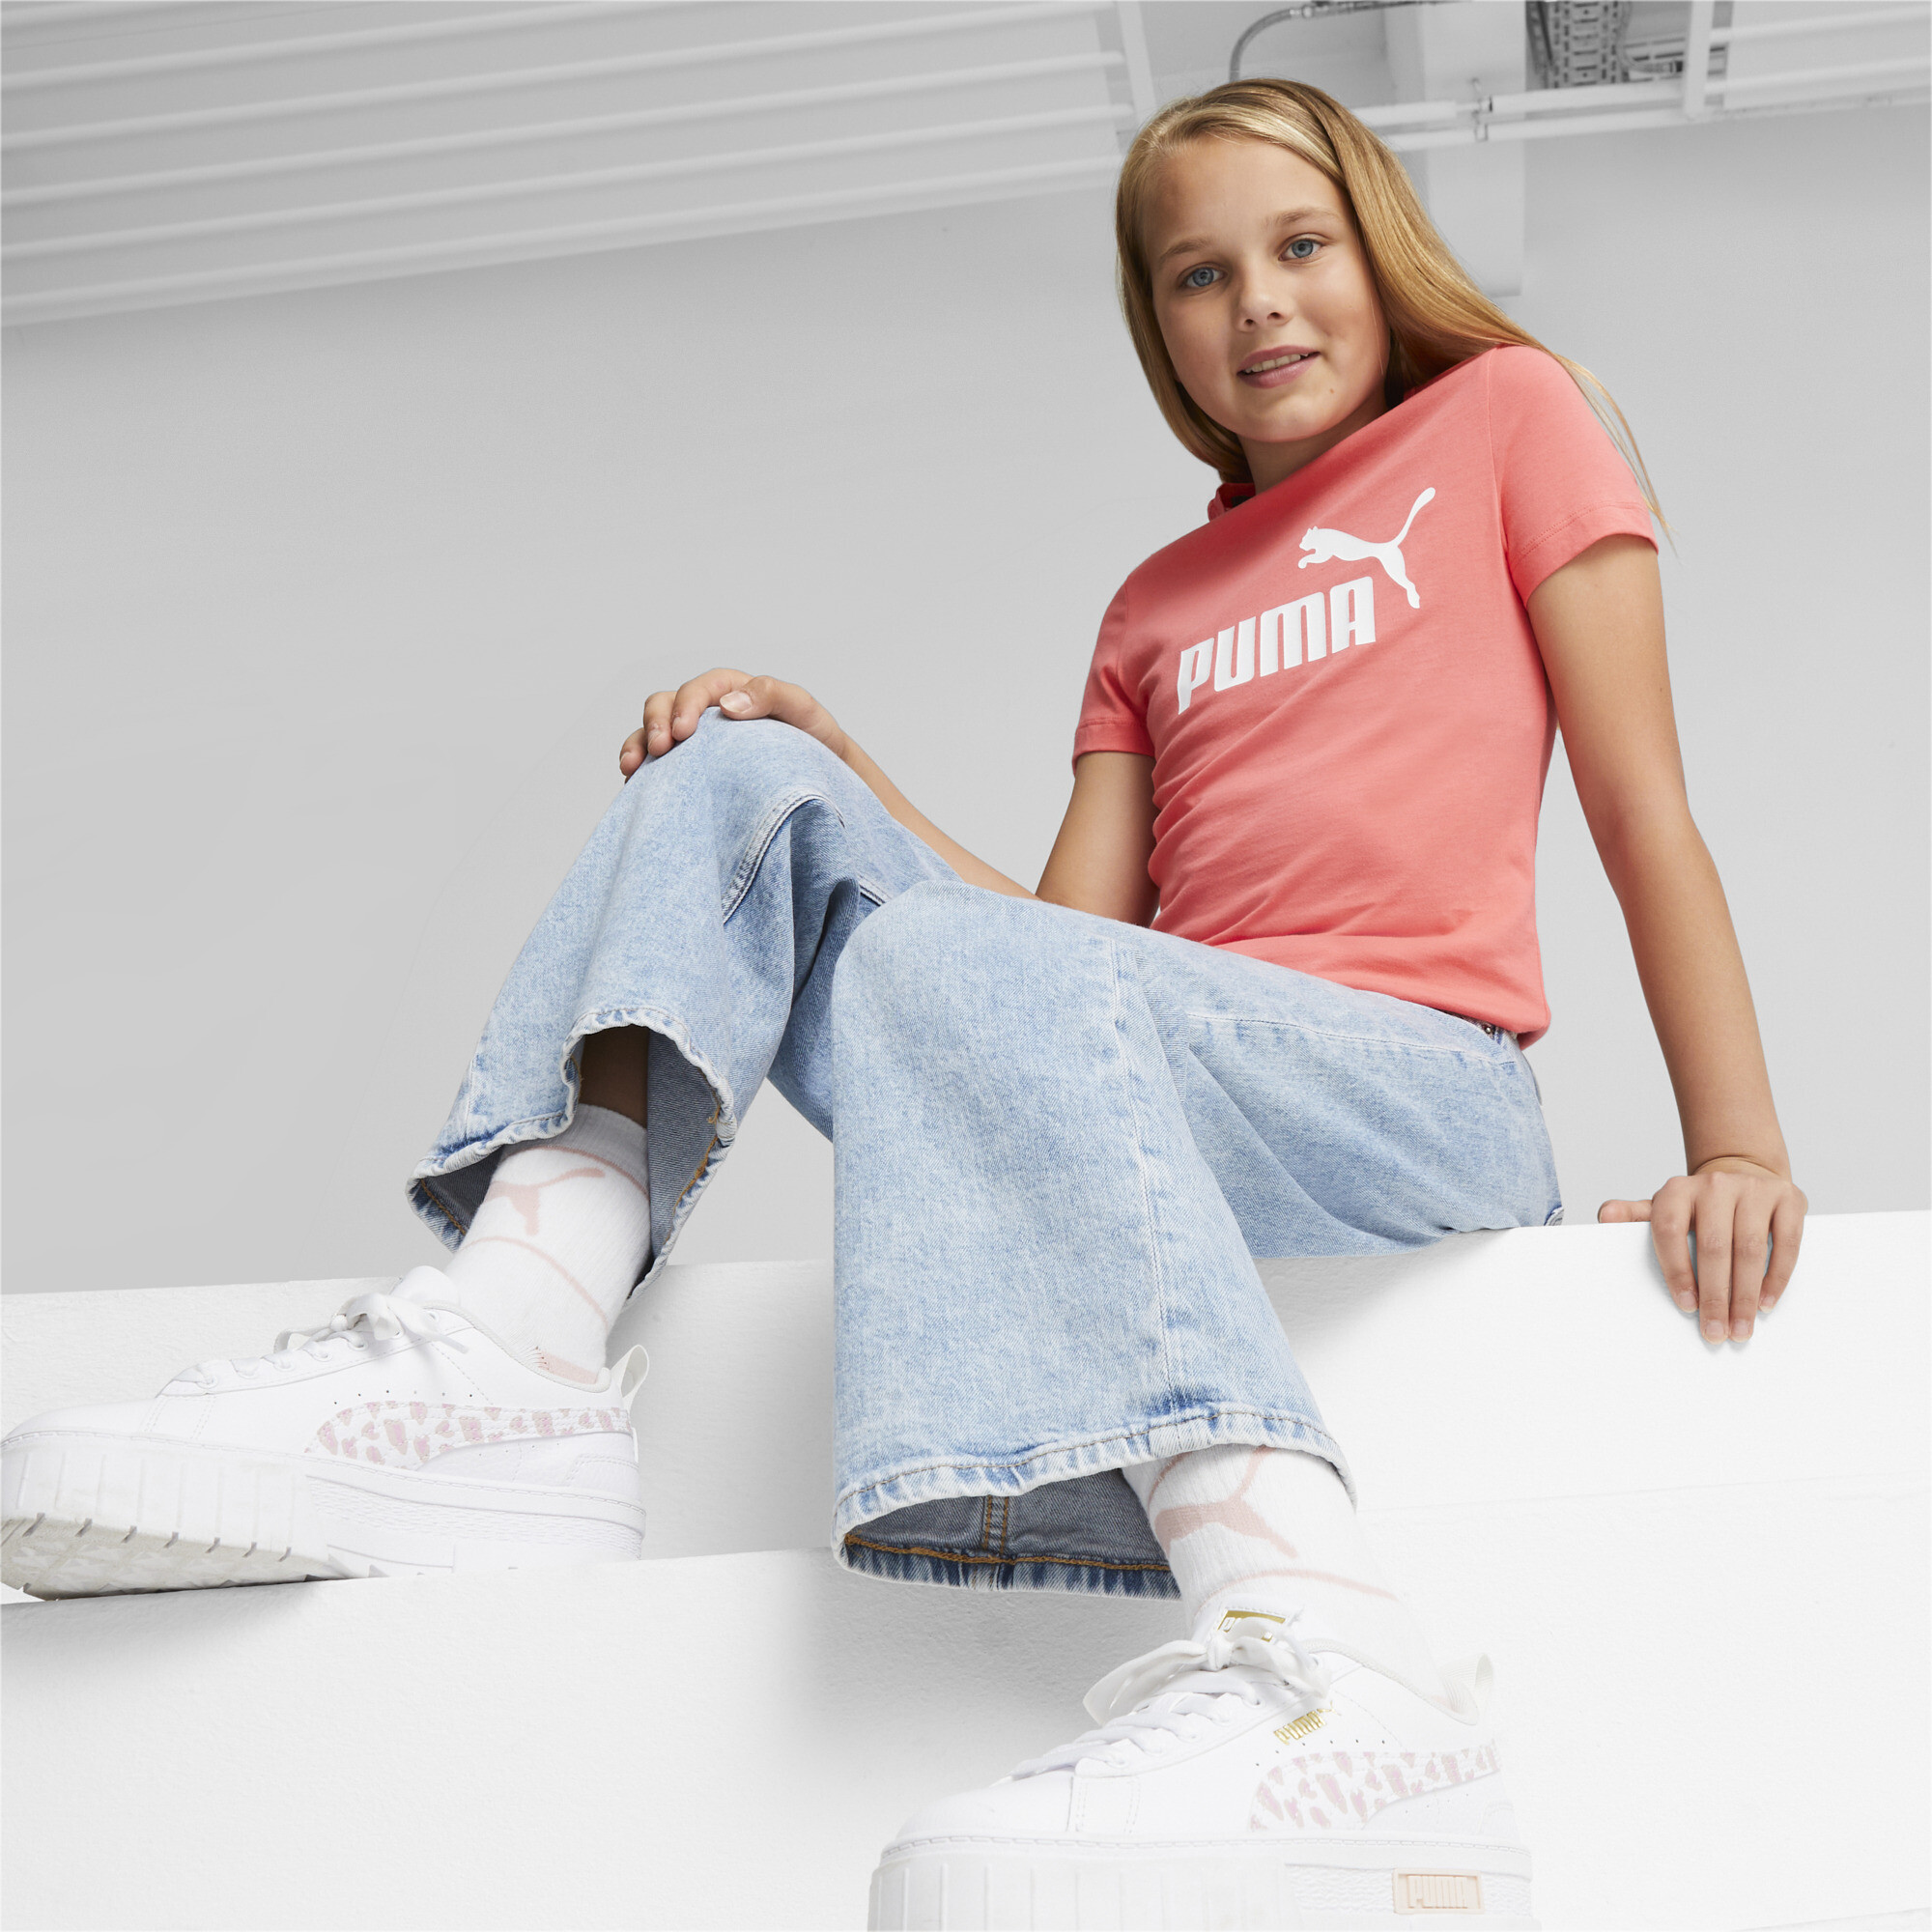 Women's Puma Essentials Logo Youth T-Shirt, Pink, Size 3-4Y, Clothing